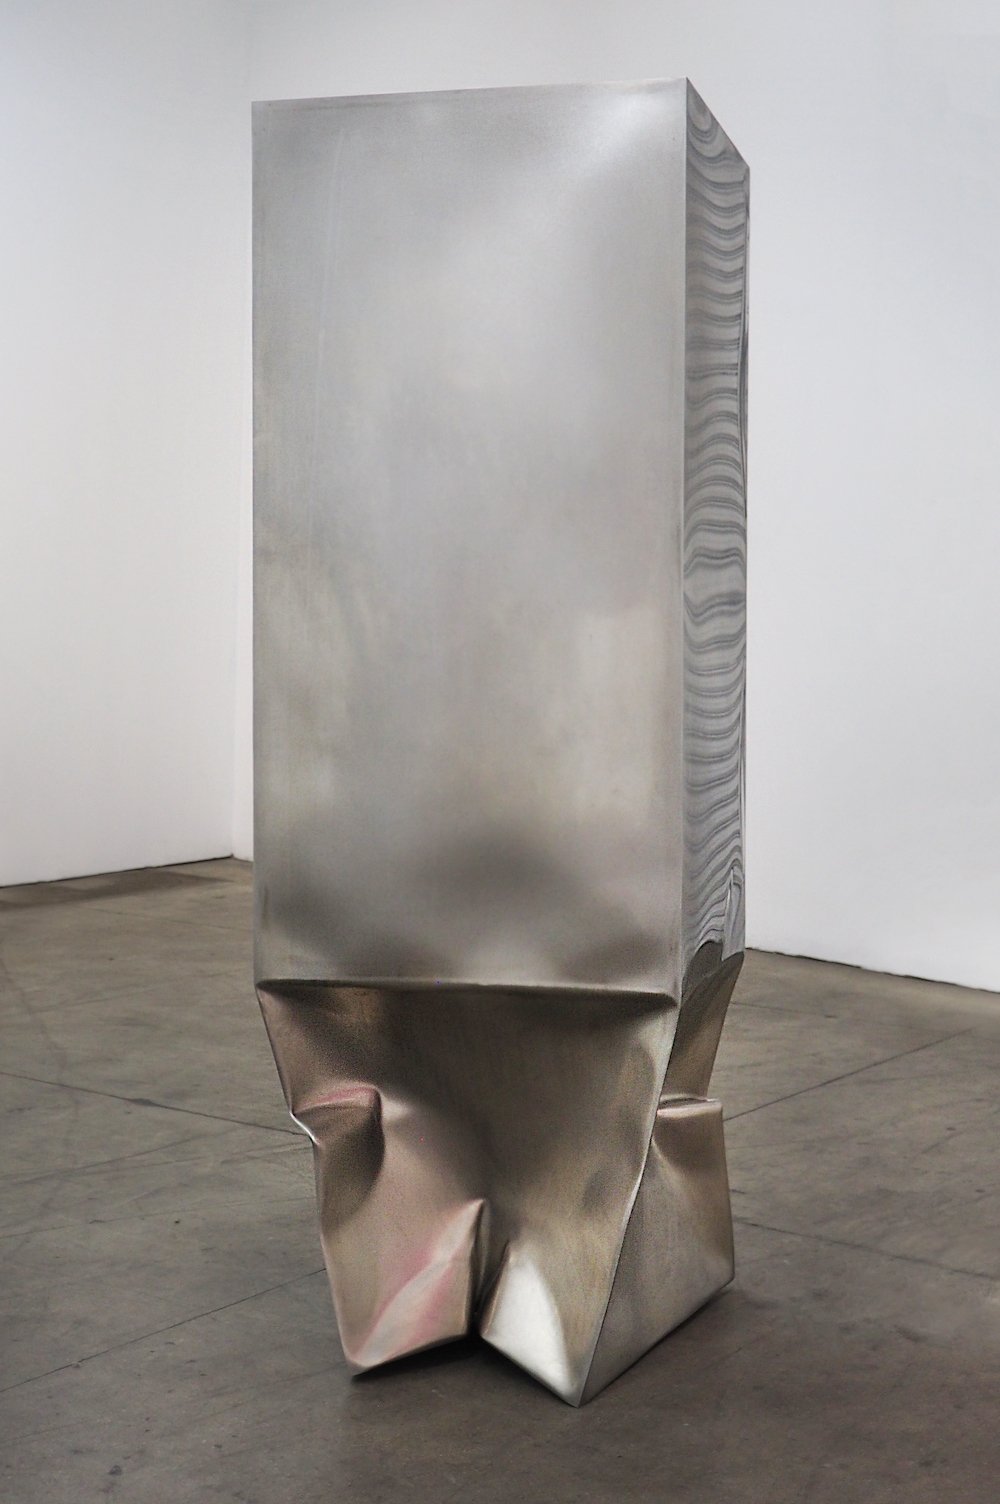  Ewerdt Hilgemann  Imploded Column (2:1) Upside Down #080105 , 2008 stainless steel 72 x 24 x 24 in (182.9 x 61 x 61 cm) 